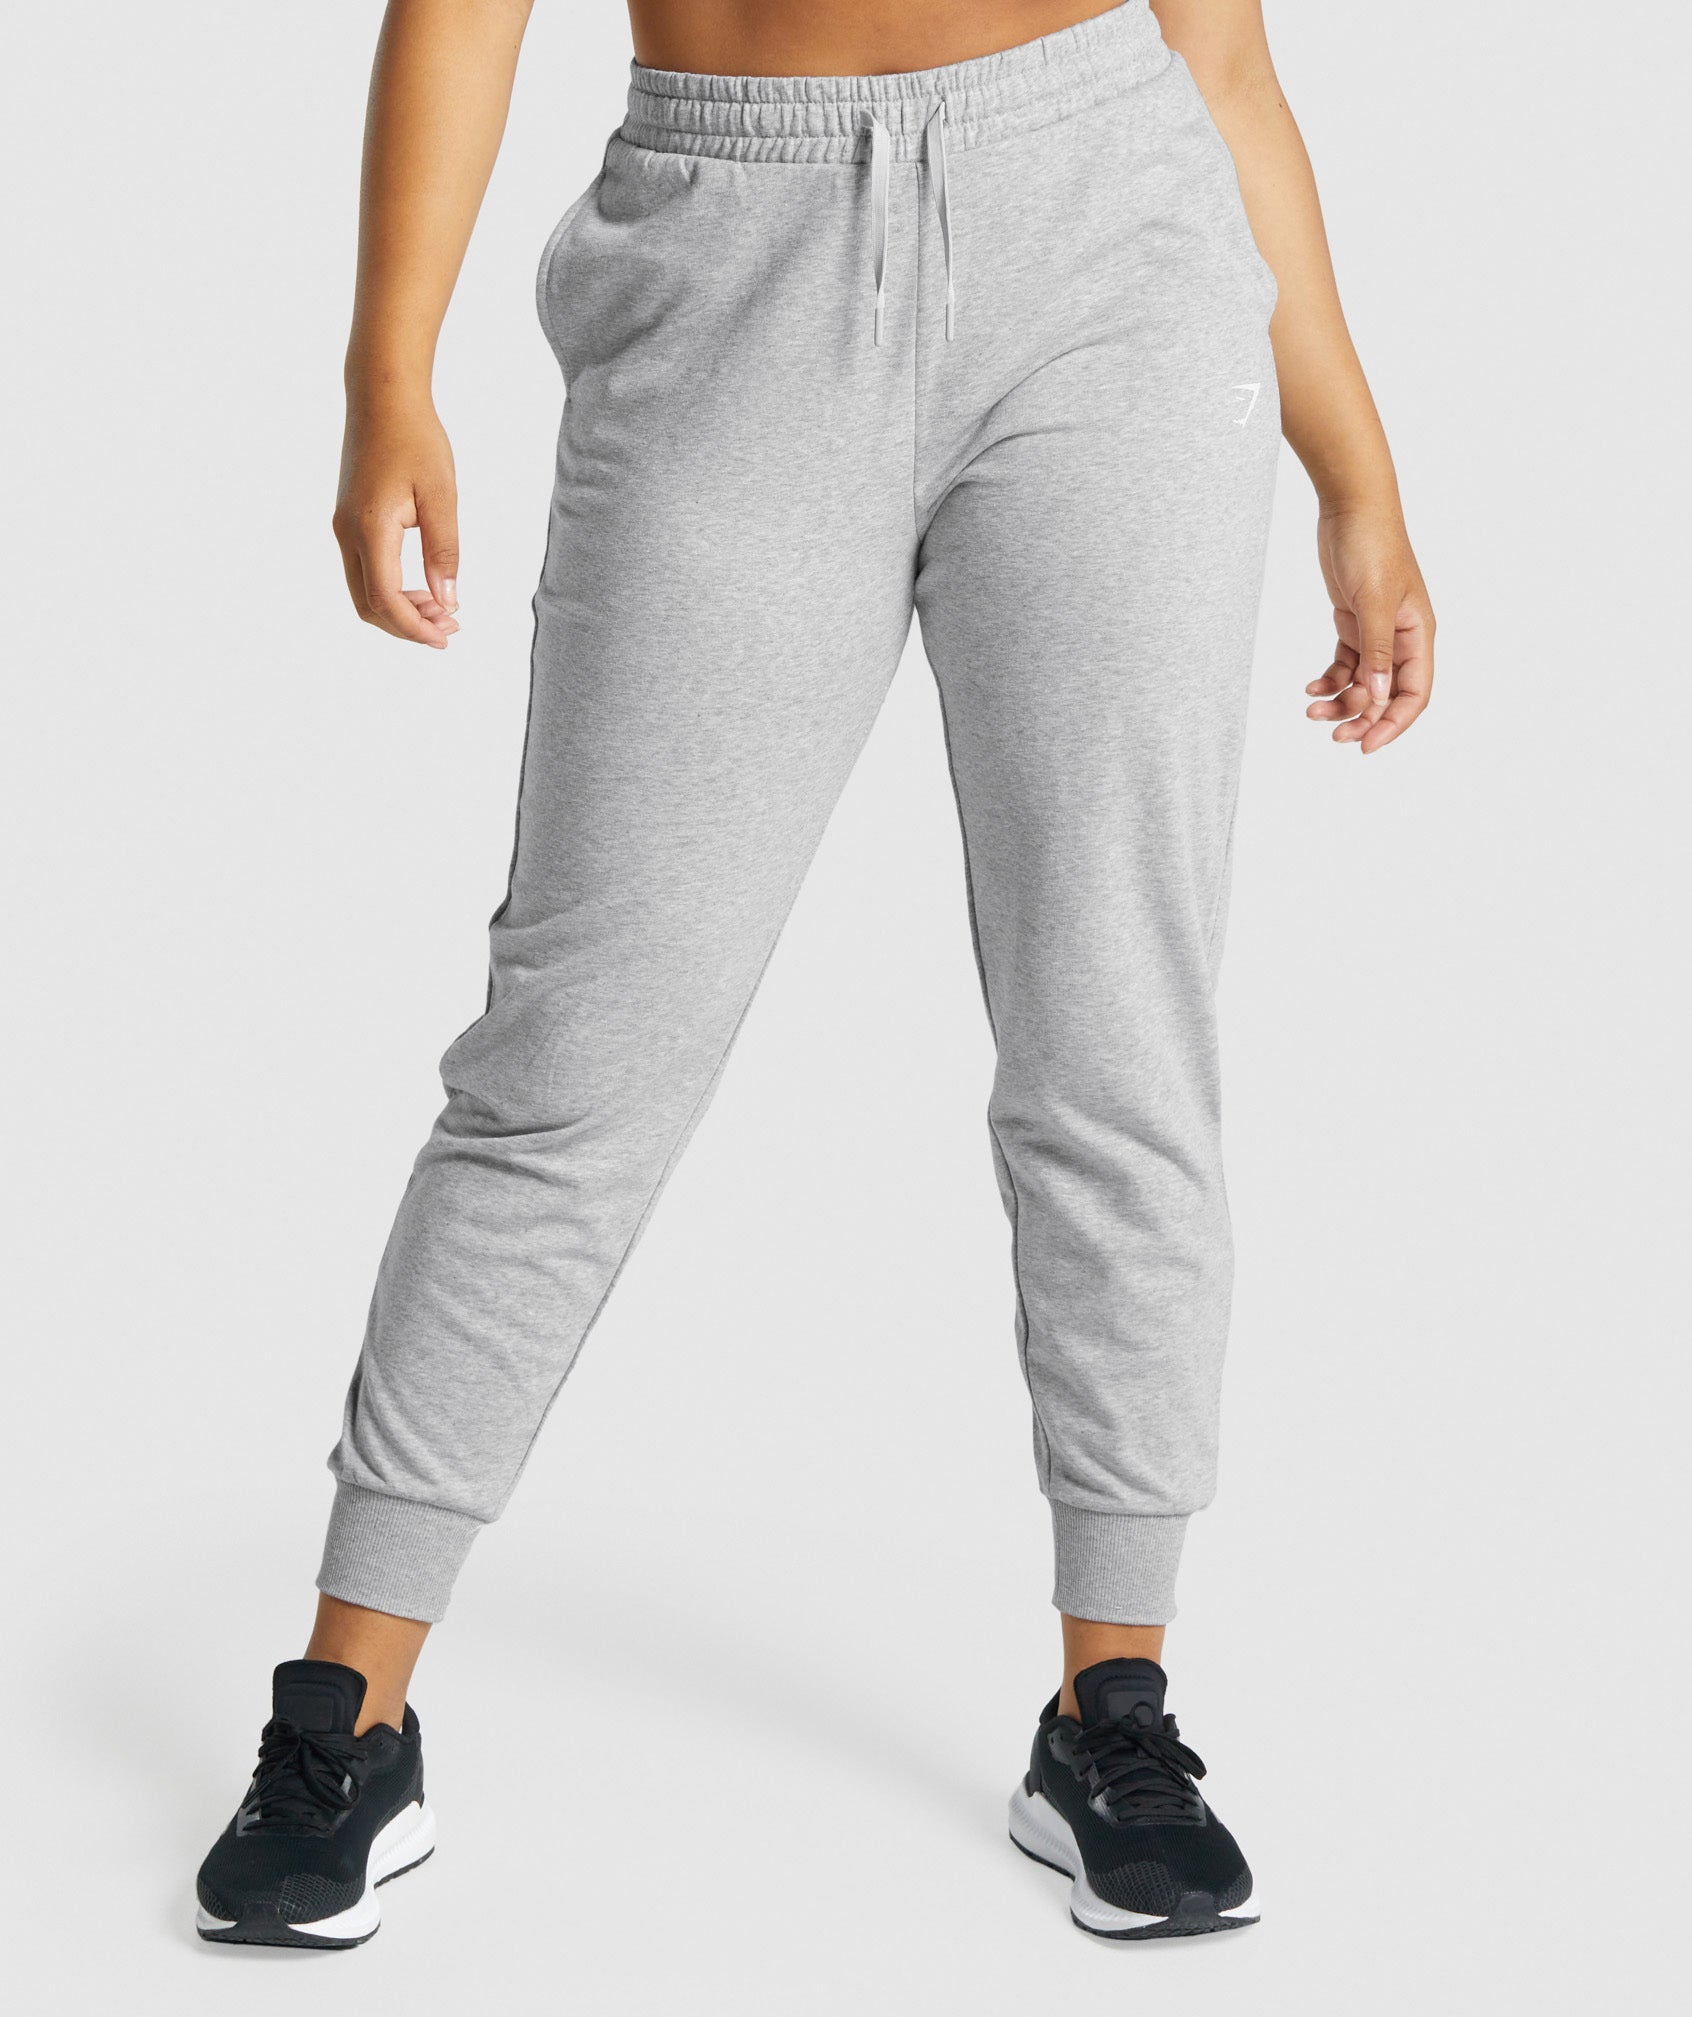 grey sweatpants season 😏 #gymsharksponsoredathlete